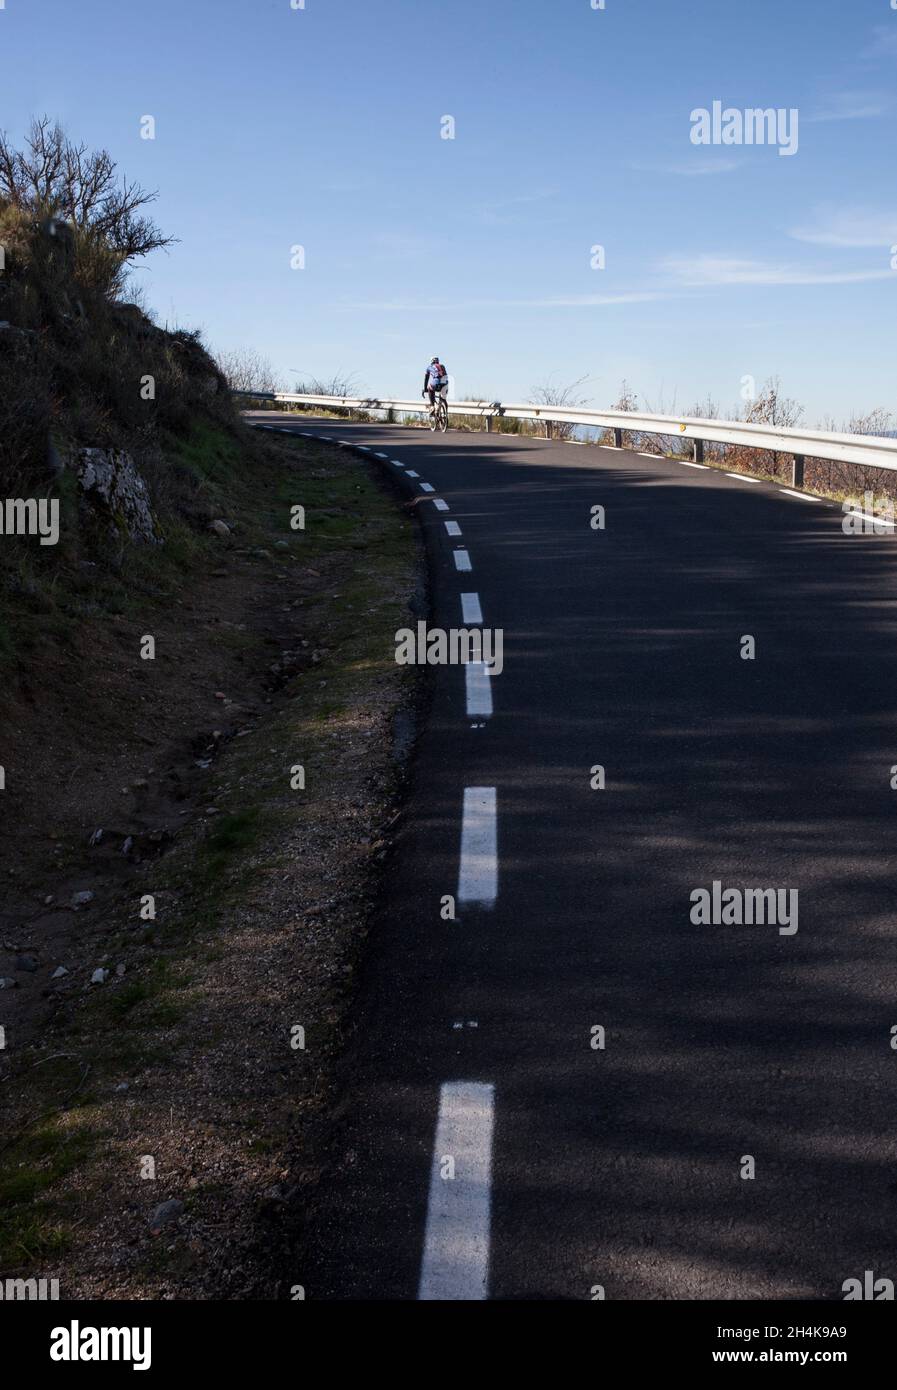 Pase de montaña ascendente maduro para ciclistas. Ciclismo de carretera por Extremadura, España. Foto de stock